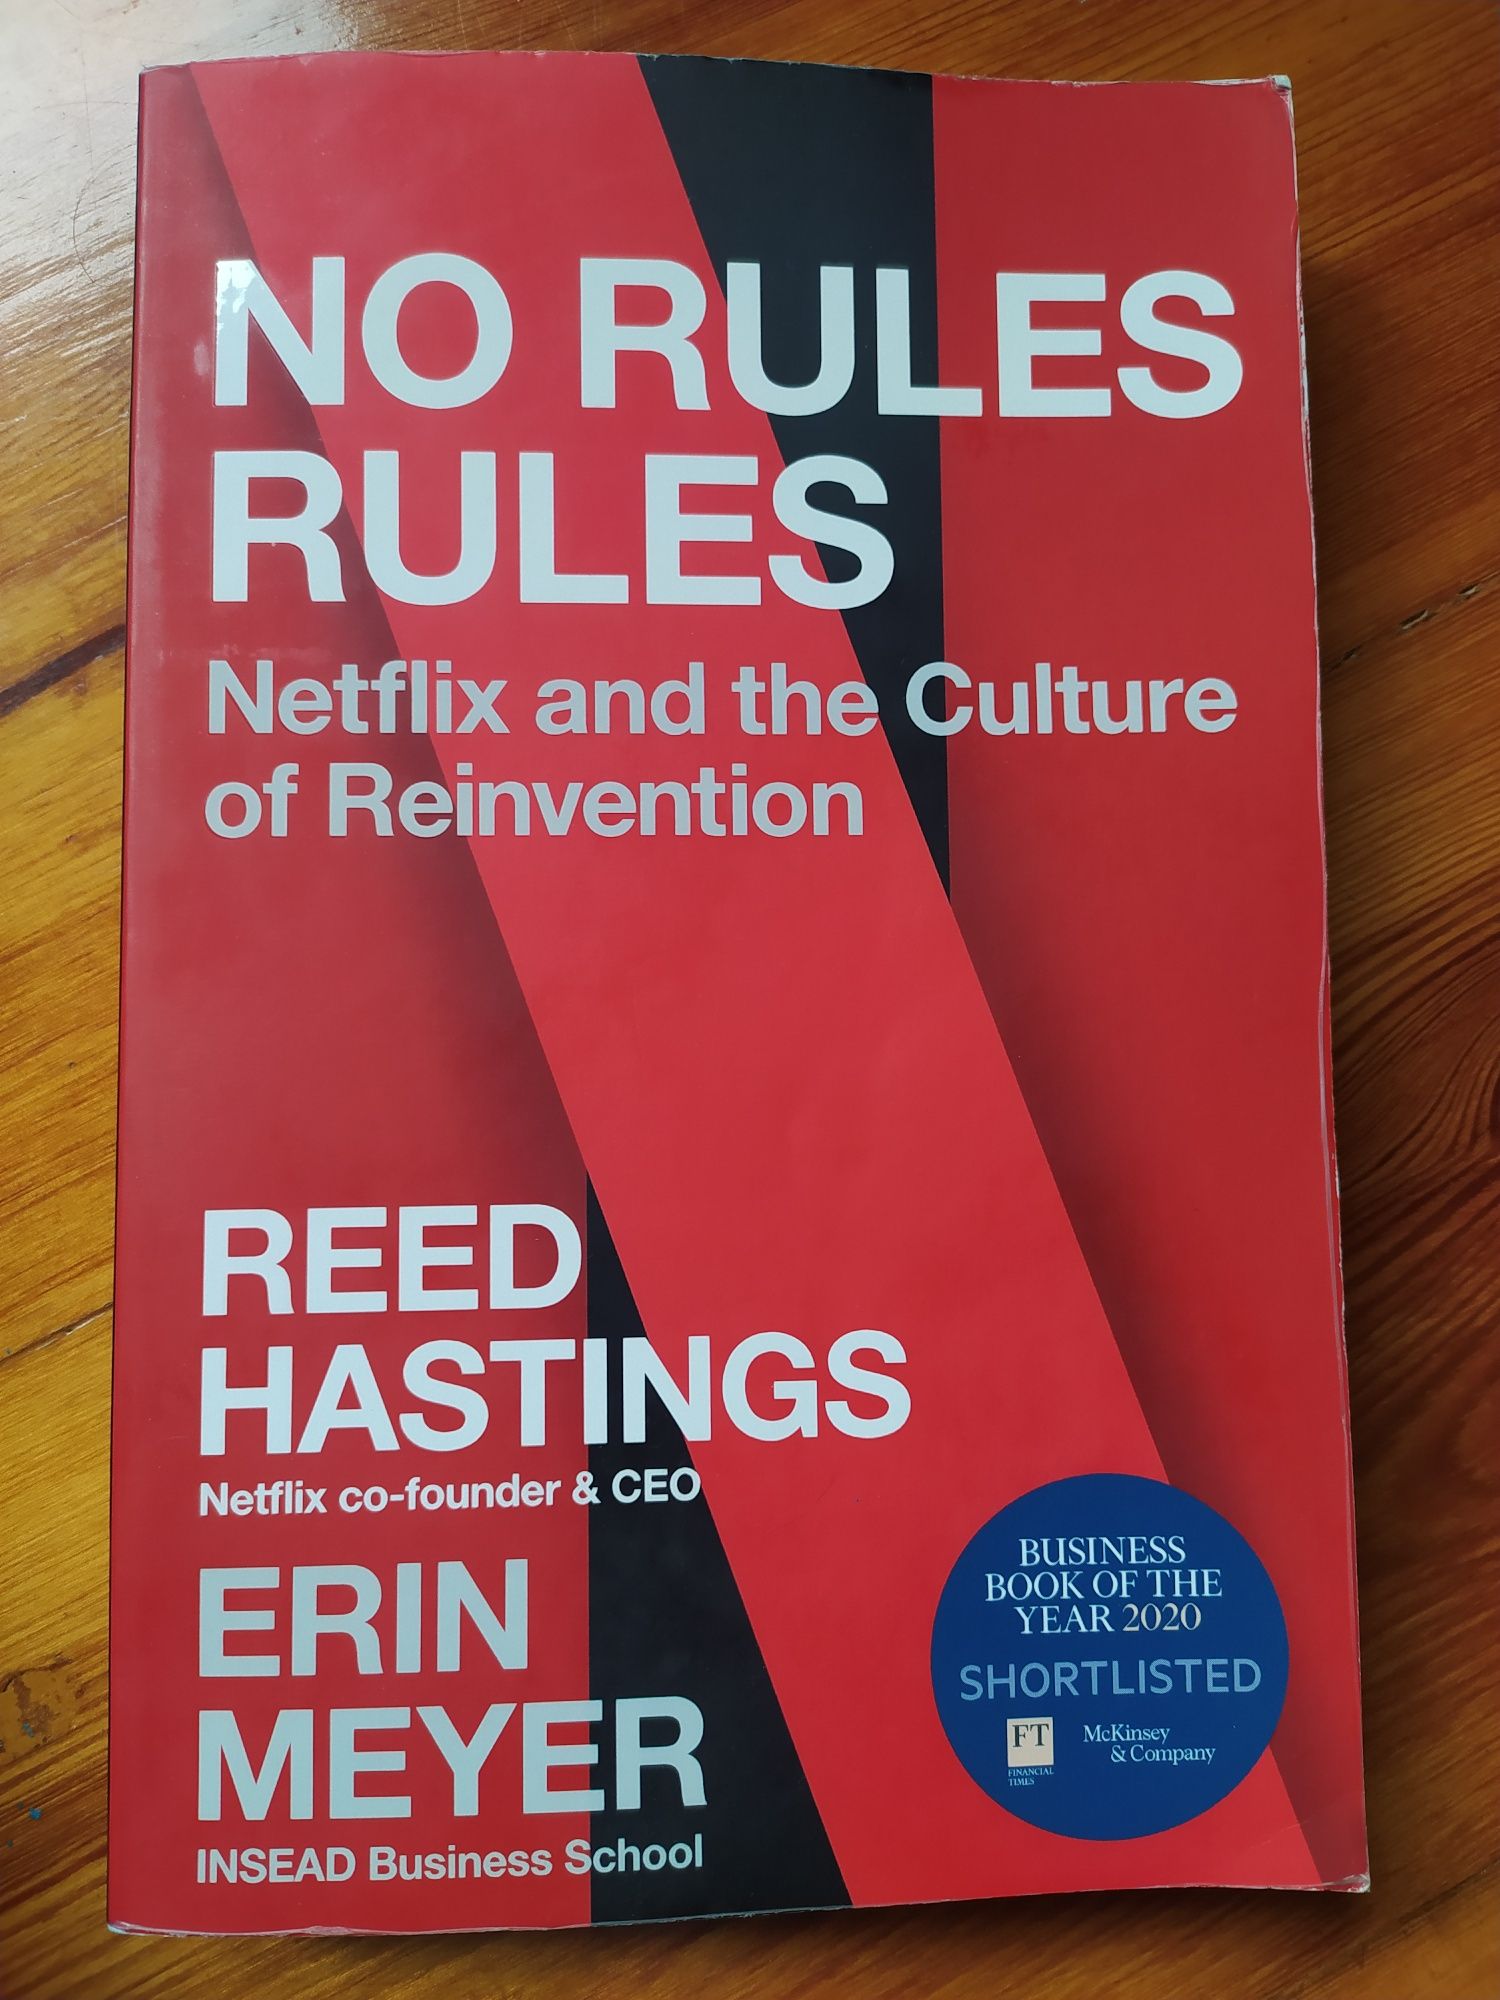 Ksiazka "No Rules Rules" Hastings, Reed ENG